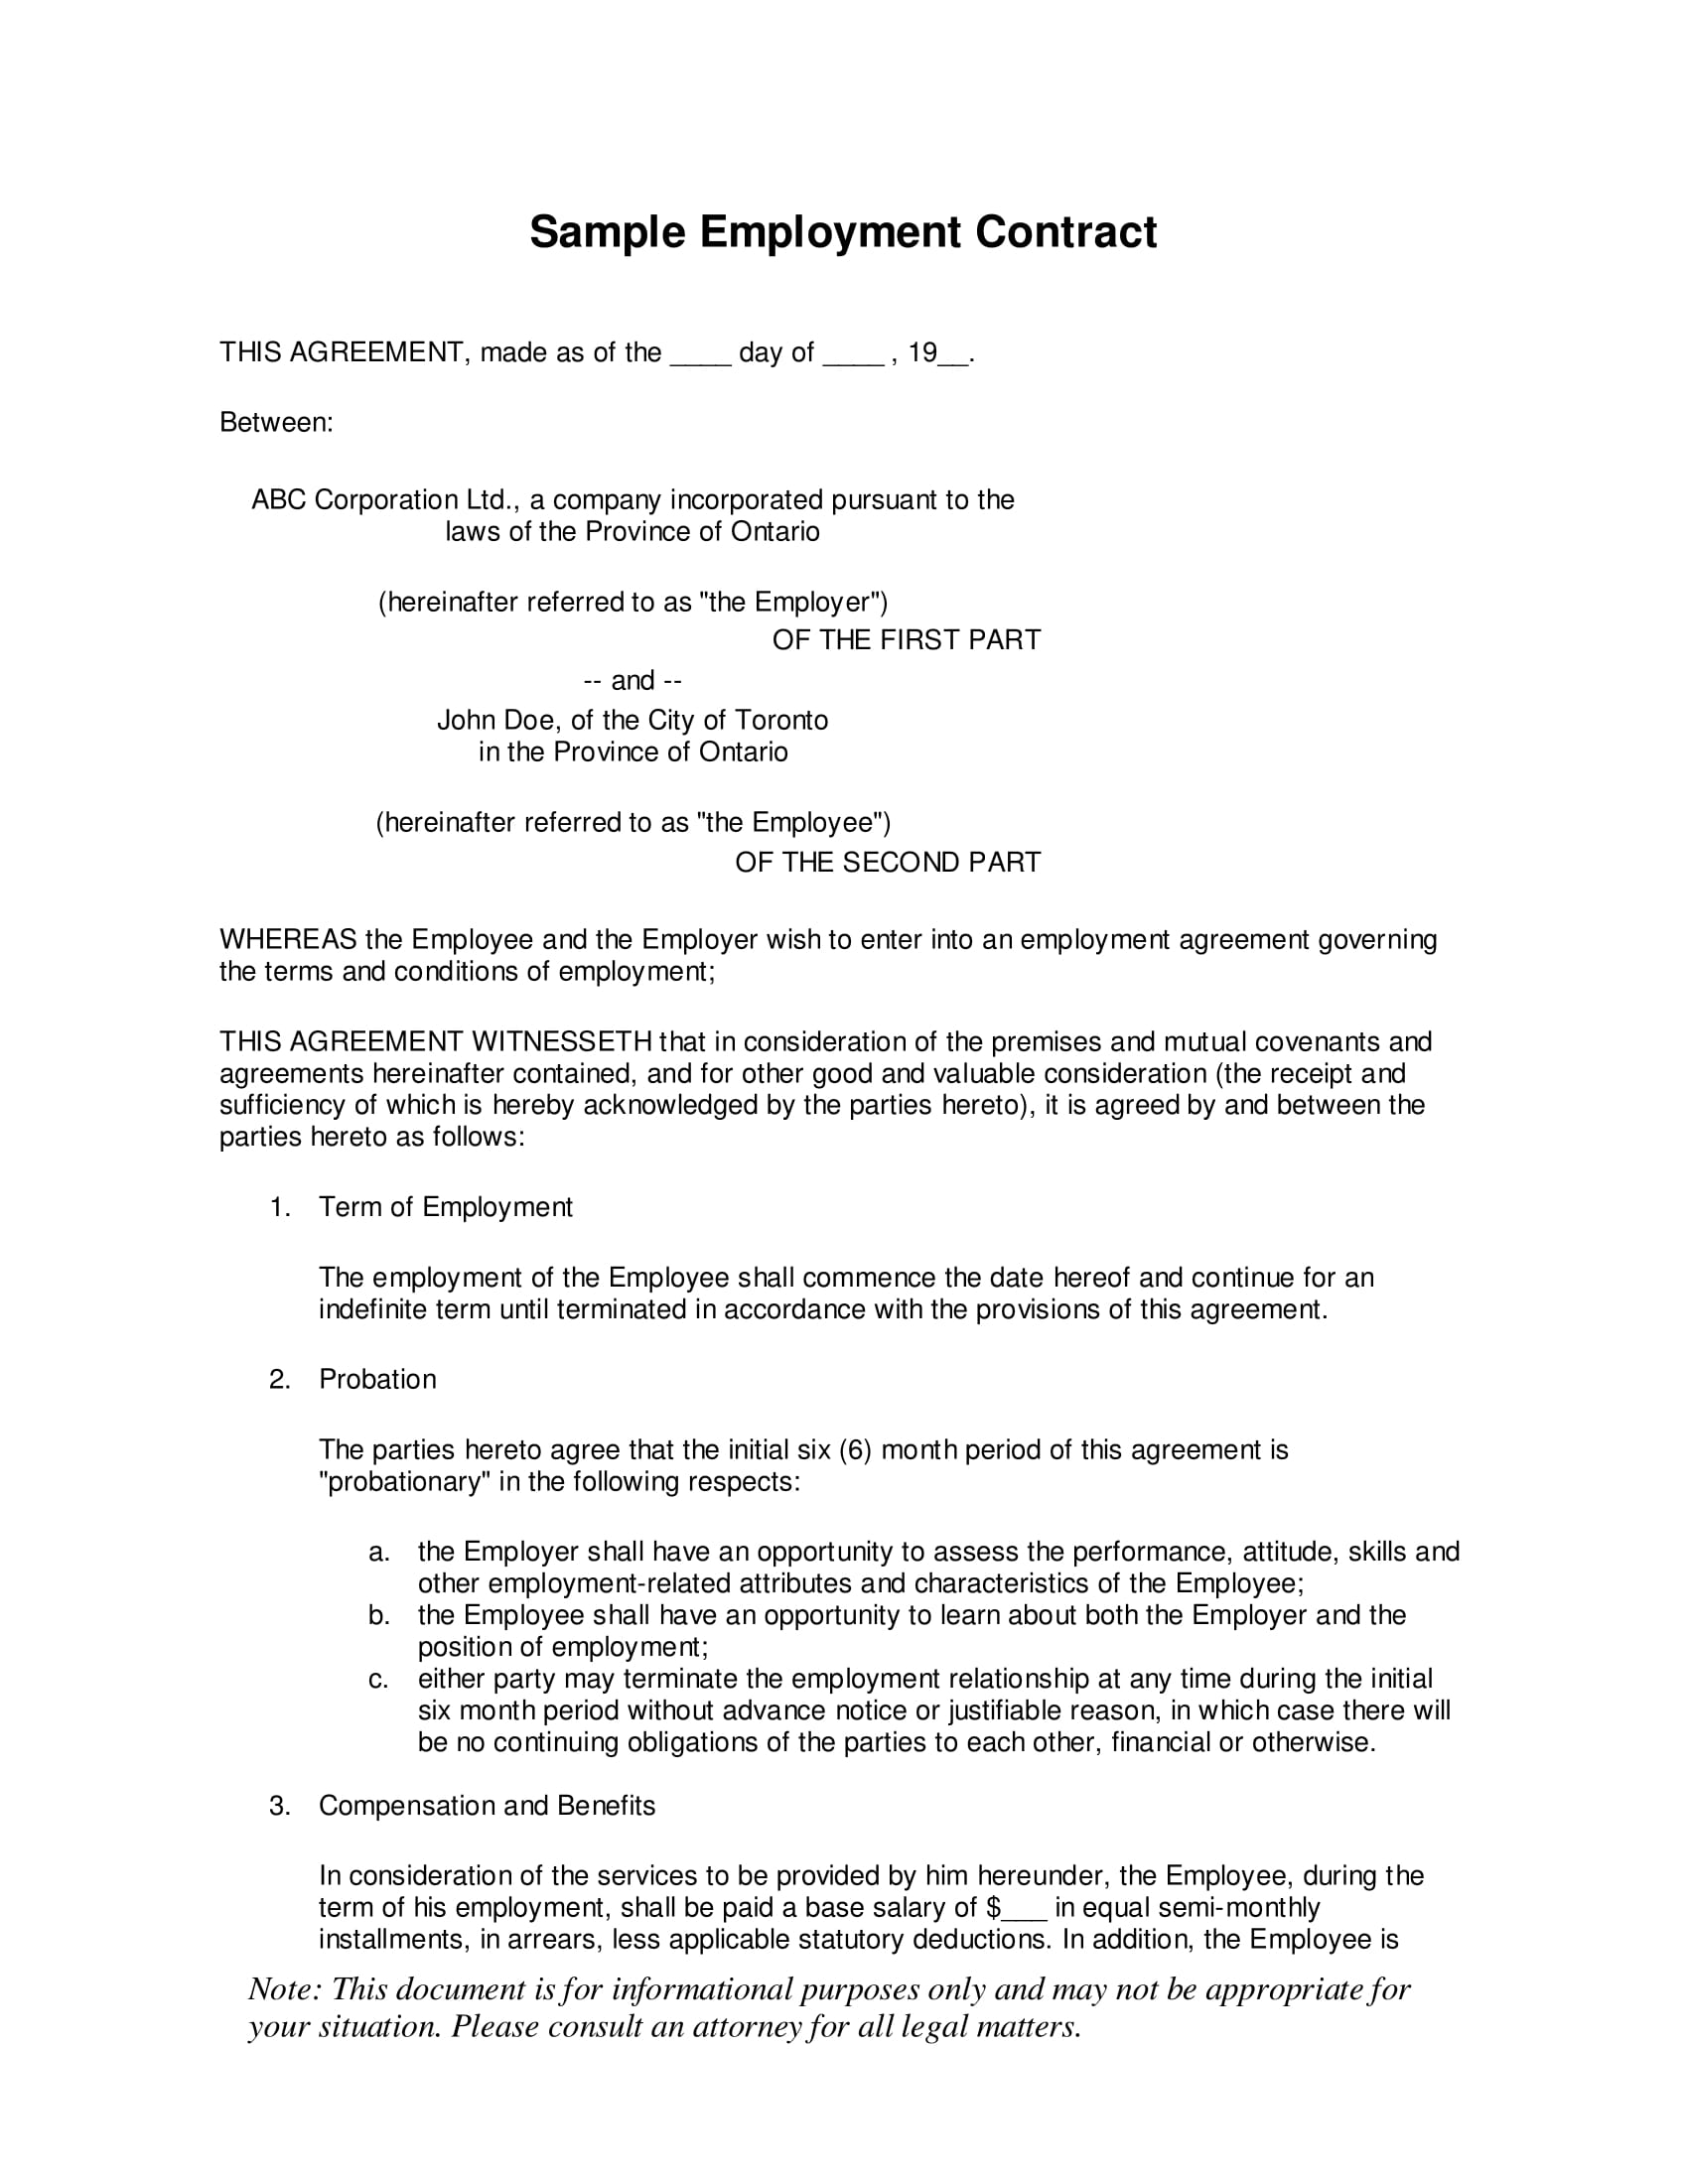 FREE 4+ Restaurant Employment Forms in PDF